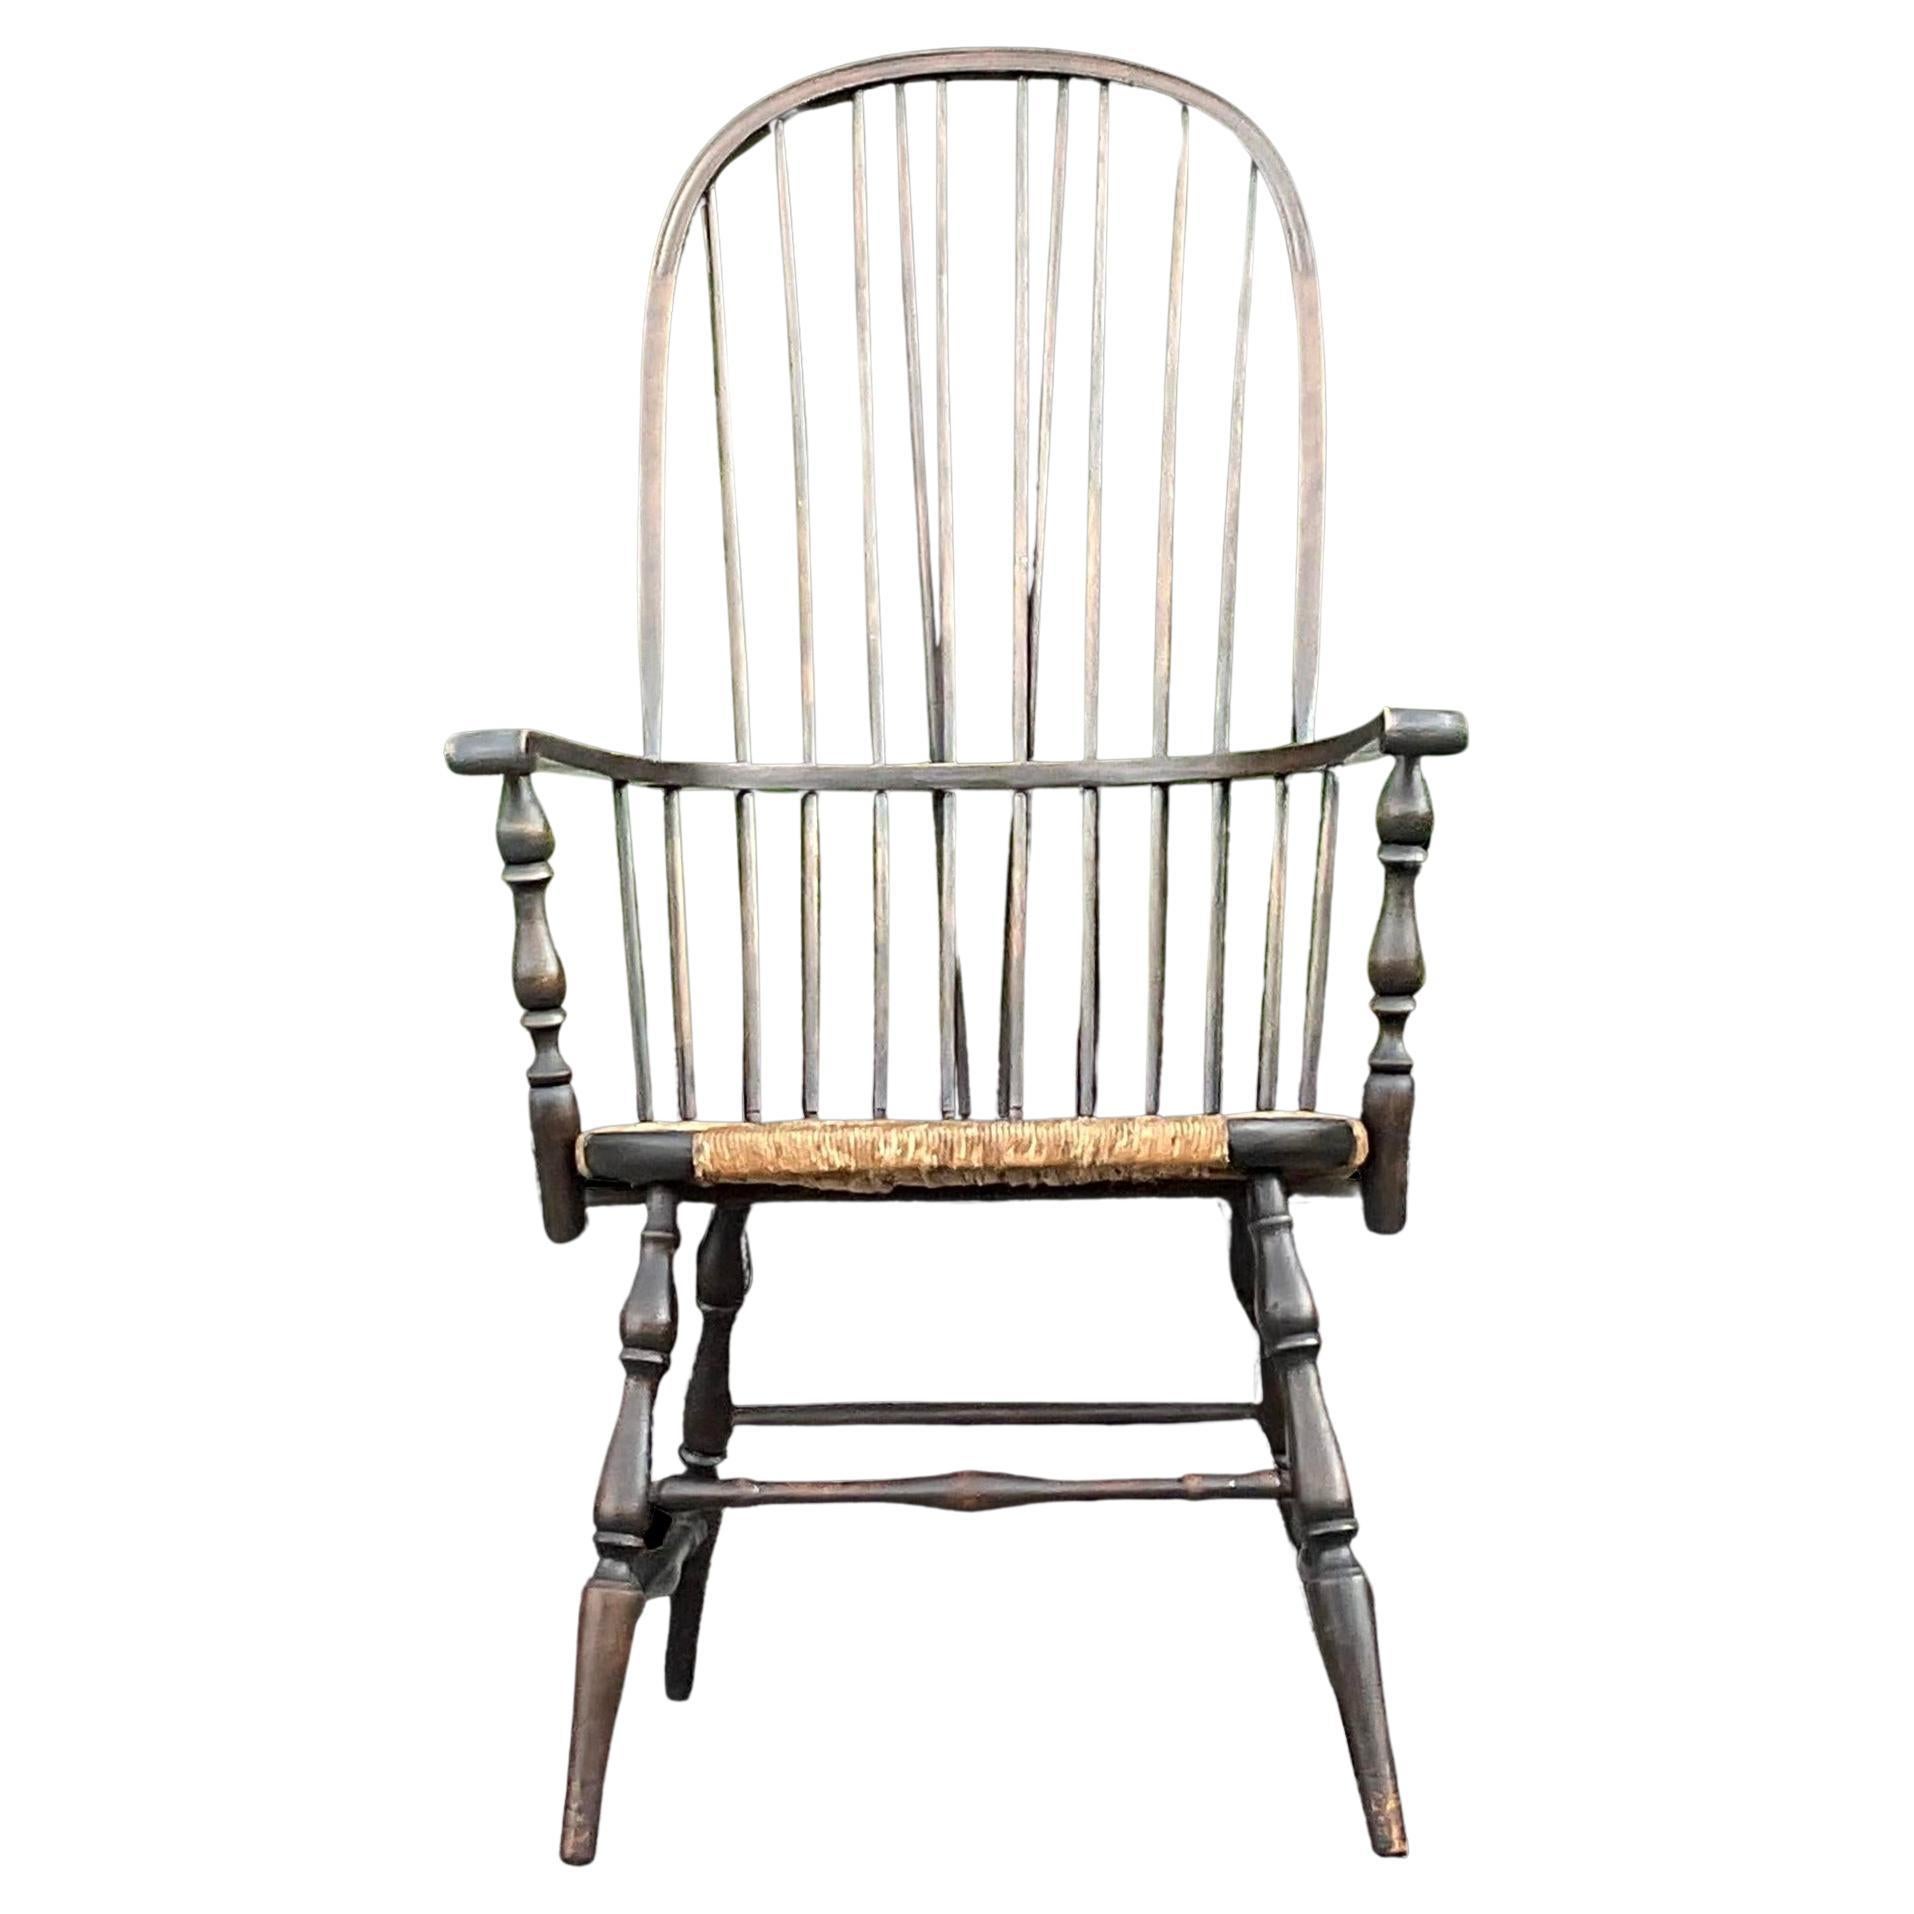 Vintage Traditional Windsor Hoop Back Chair